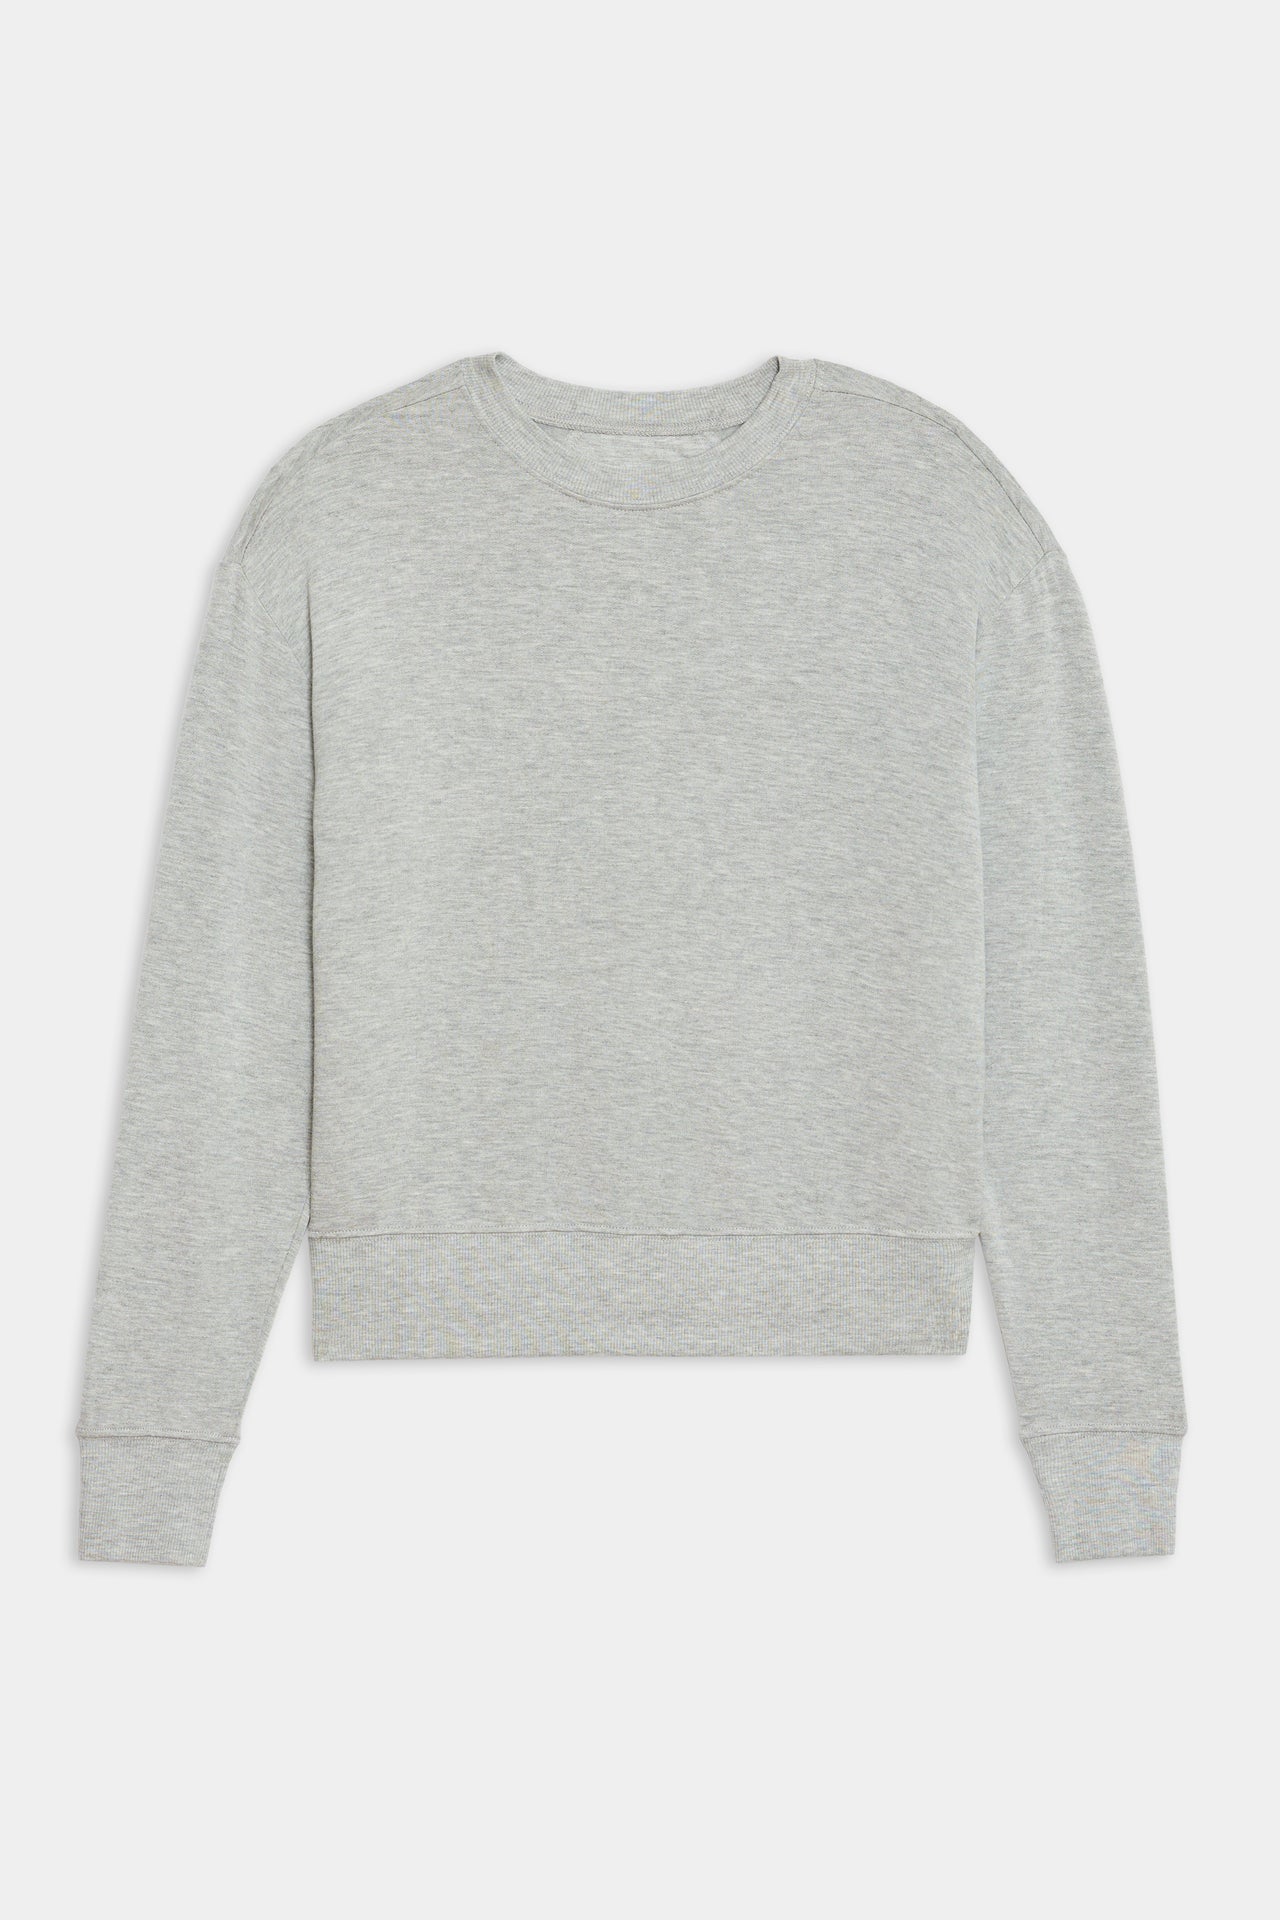 Front flat view of light grey crewneck sweatshirt